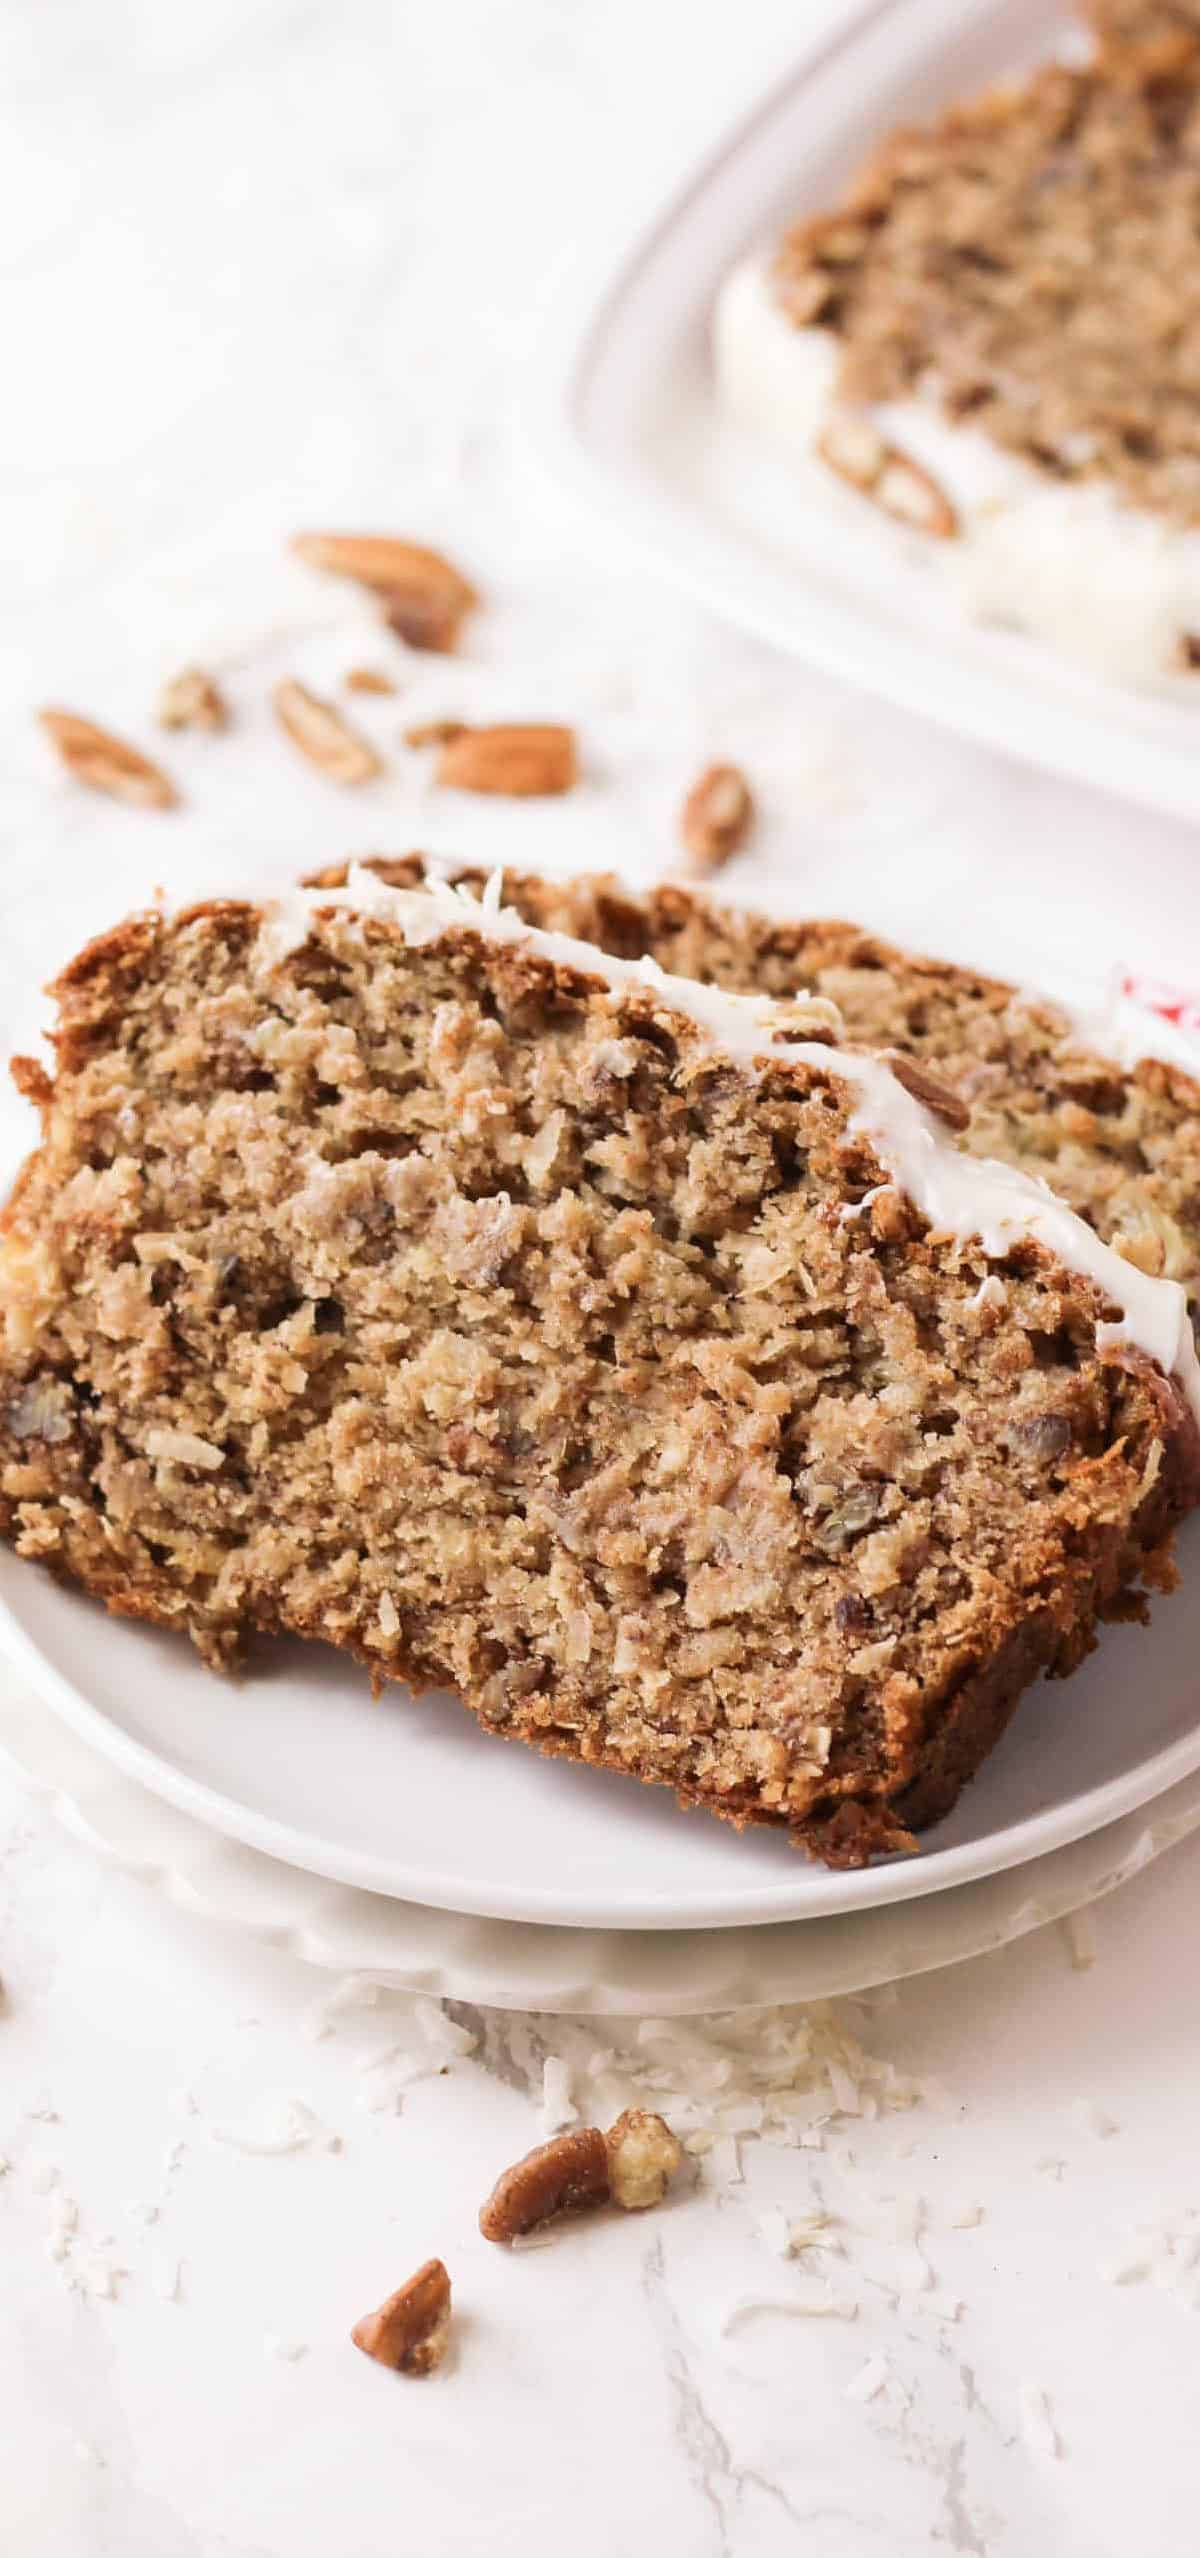  Slice into this heavenly Hummingbird bread and enjoy a gluten-free treat.